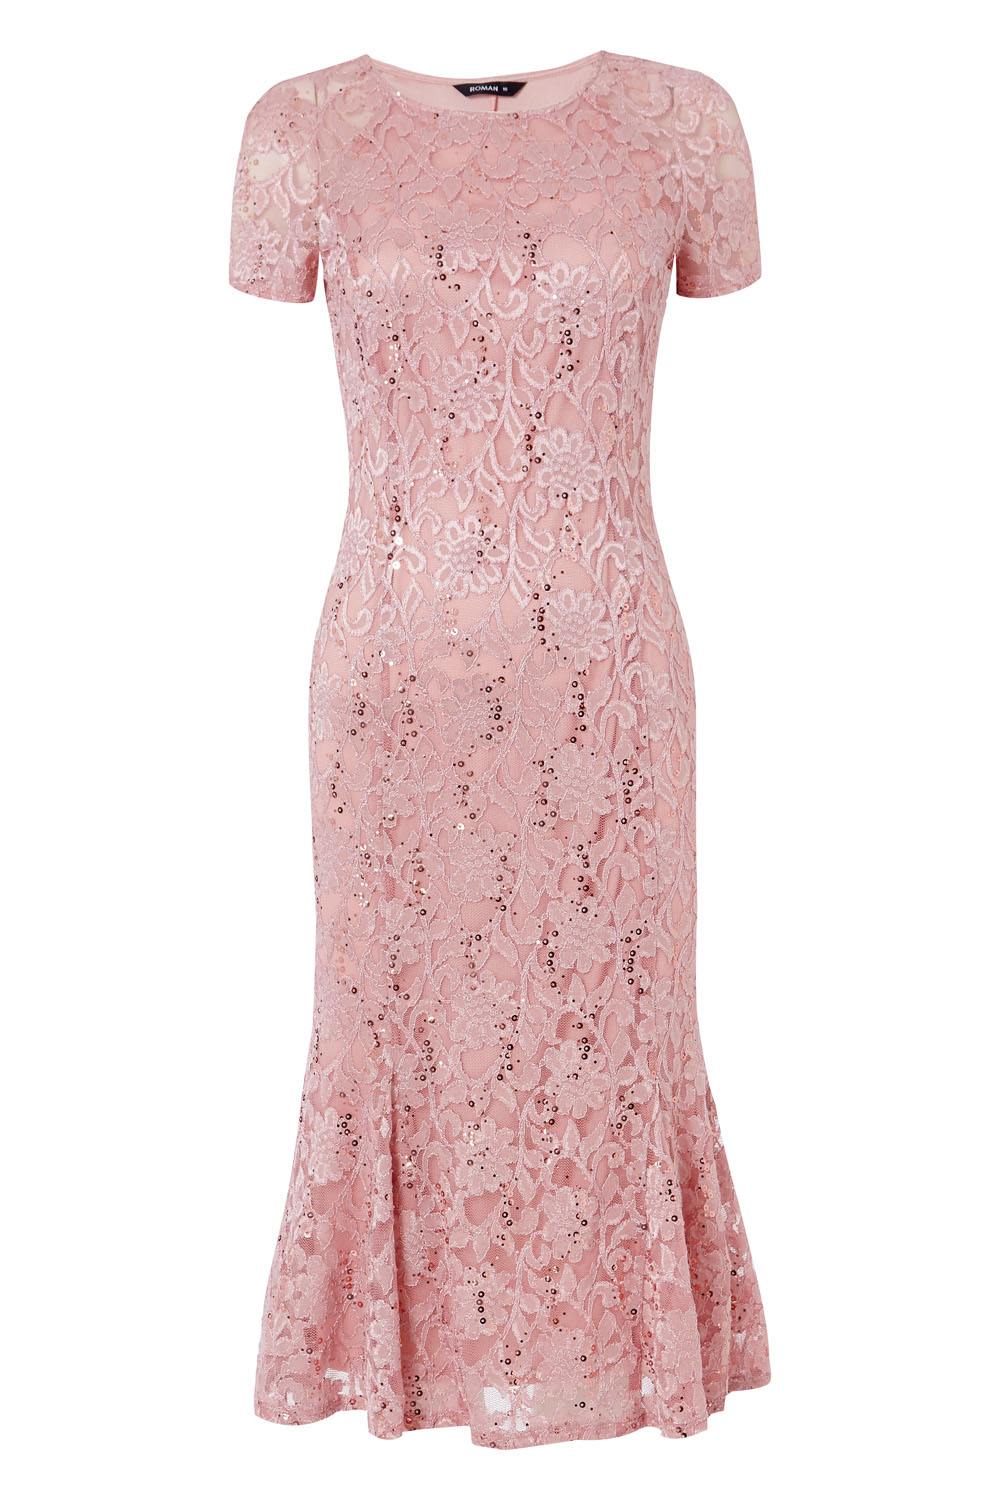 Light Pink Metallic Lace Sequin Midi Dress, Image 4 of 4